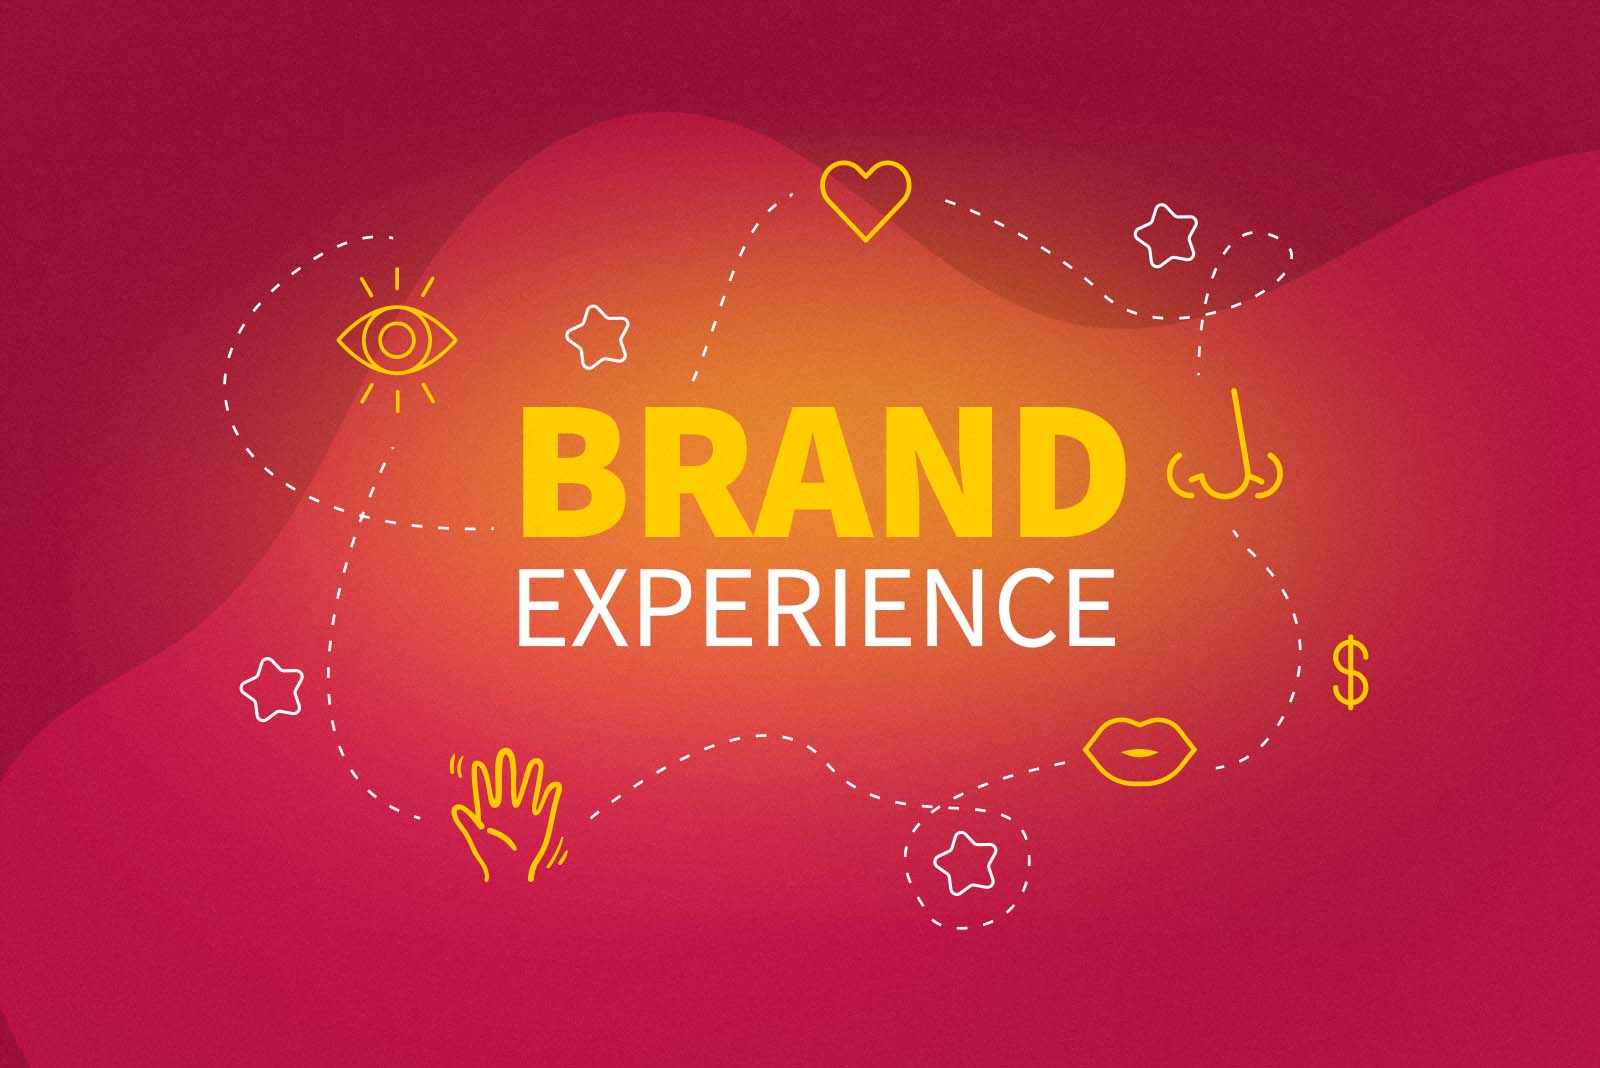 Brand experience